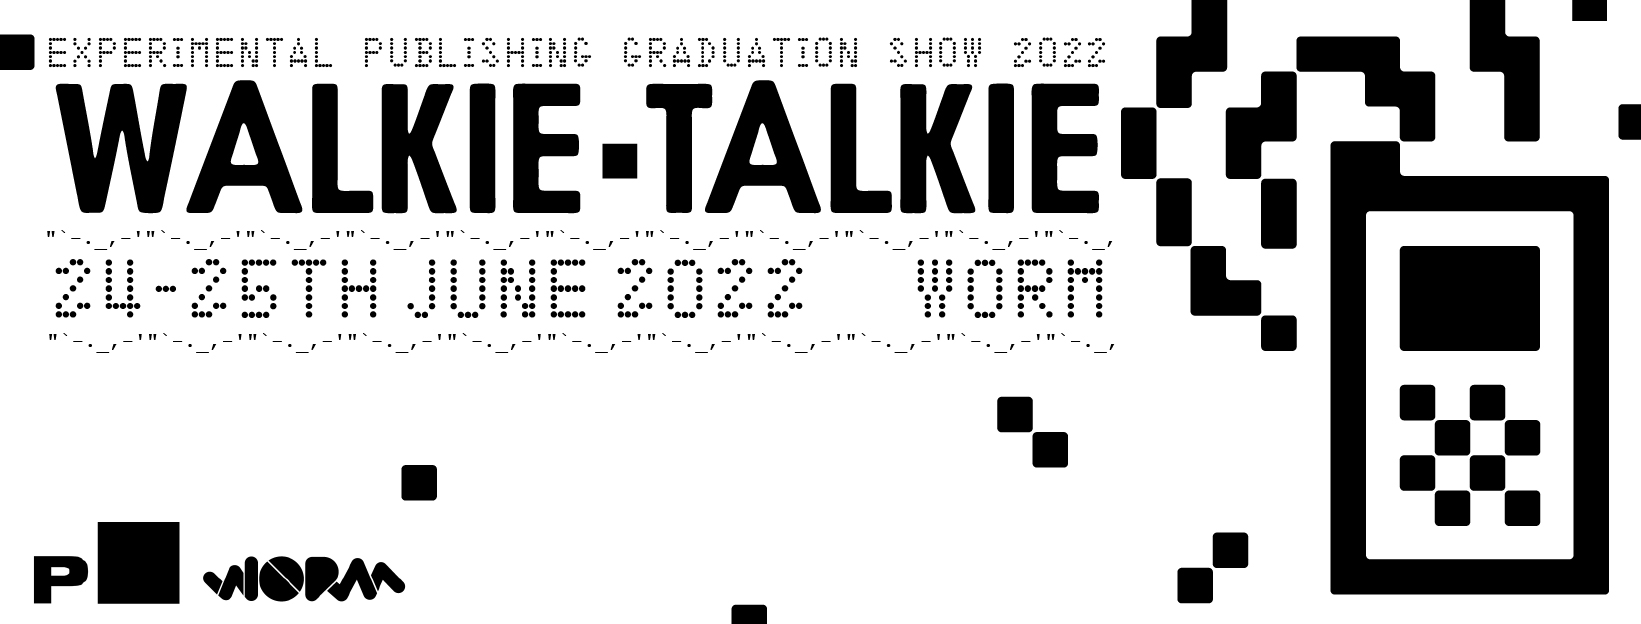 Walkie Talkie - 24-25 June - WORM